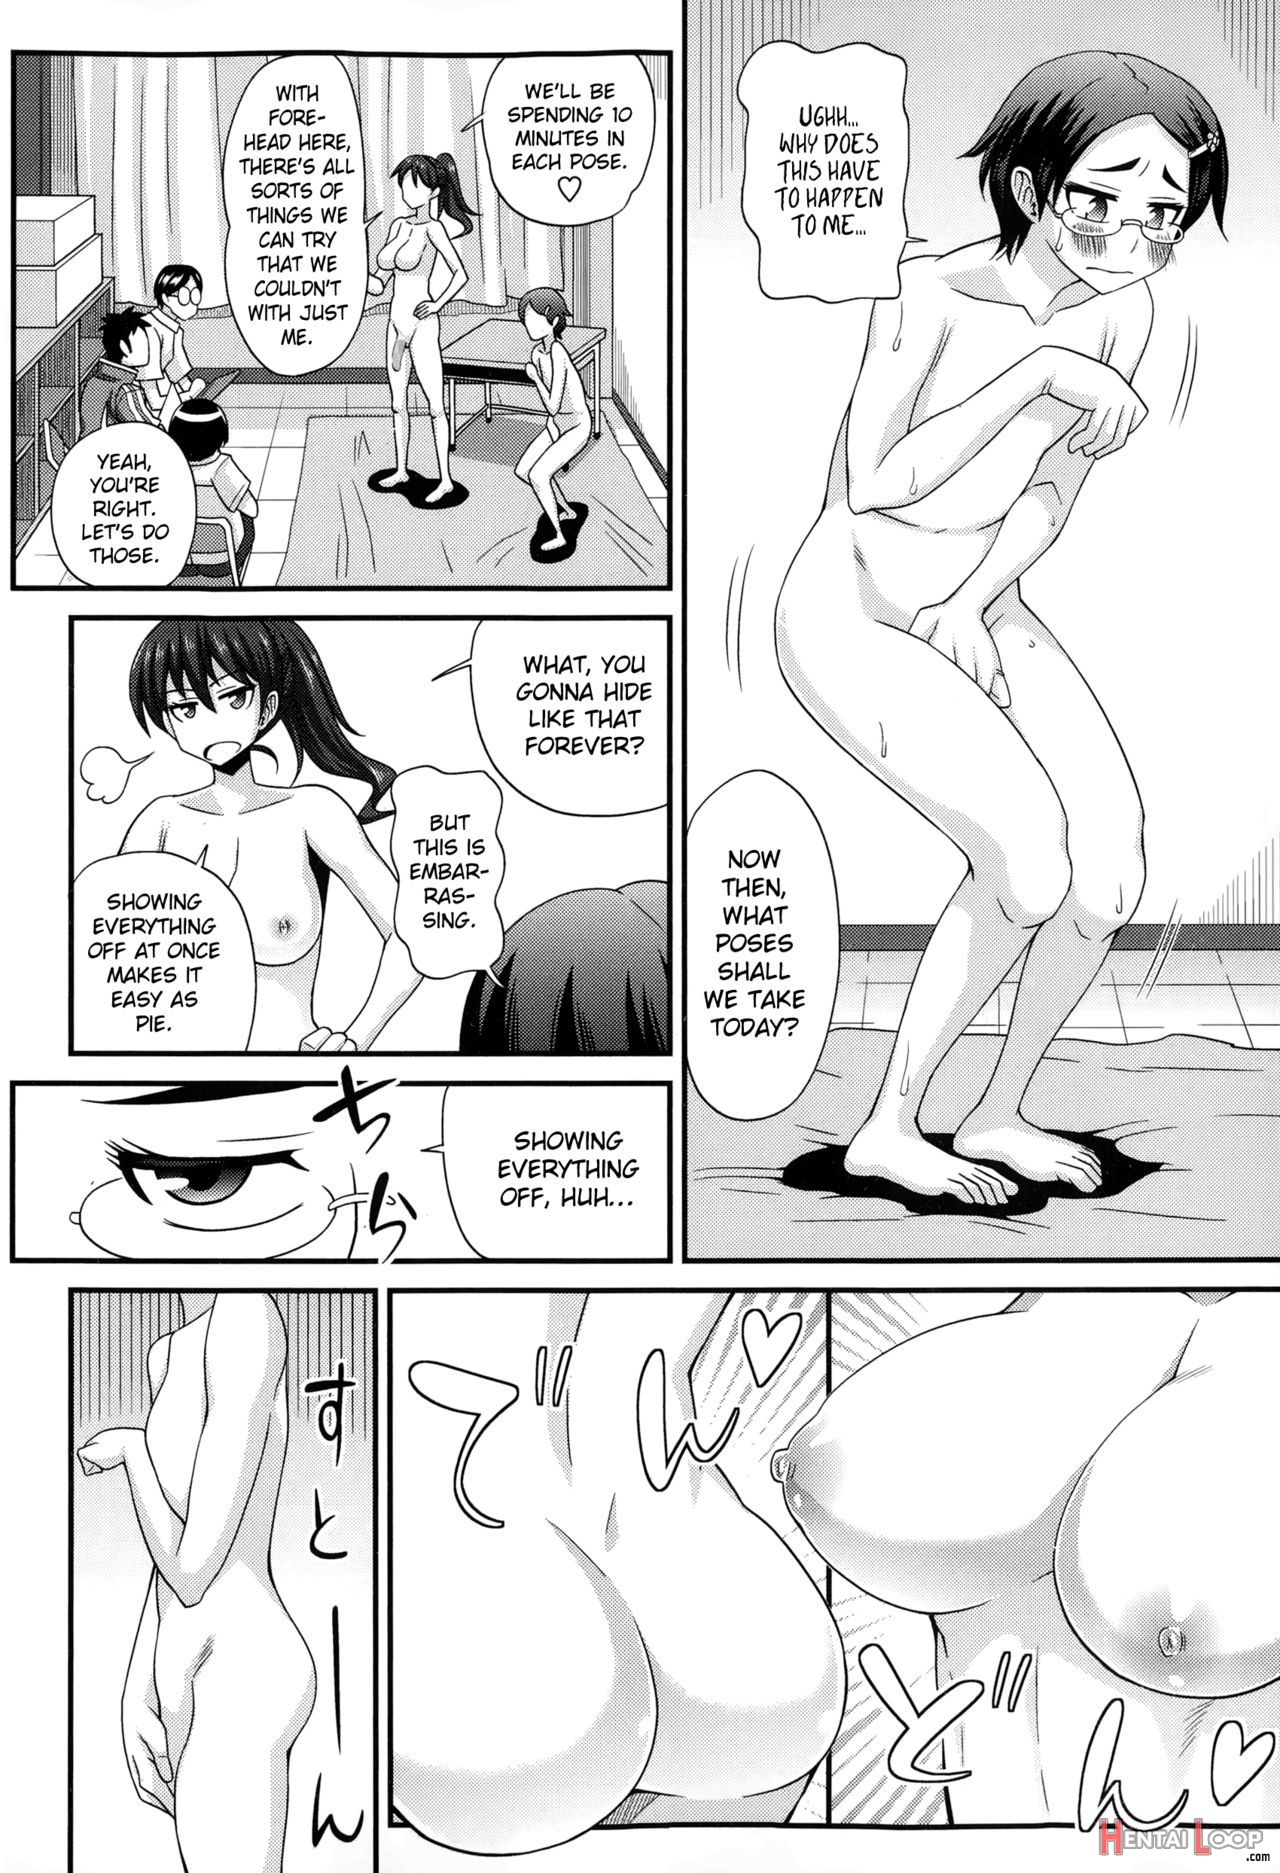 Futakyo! page 32